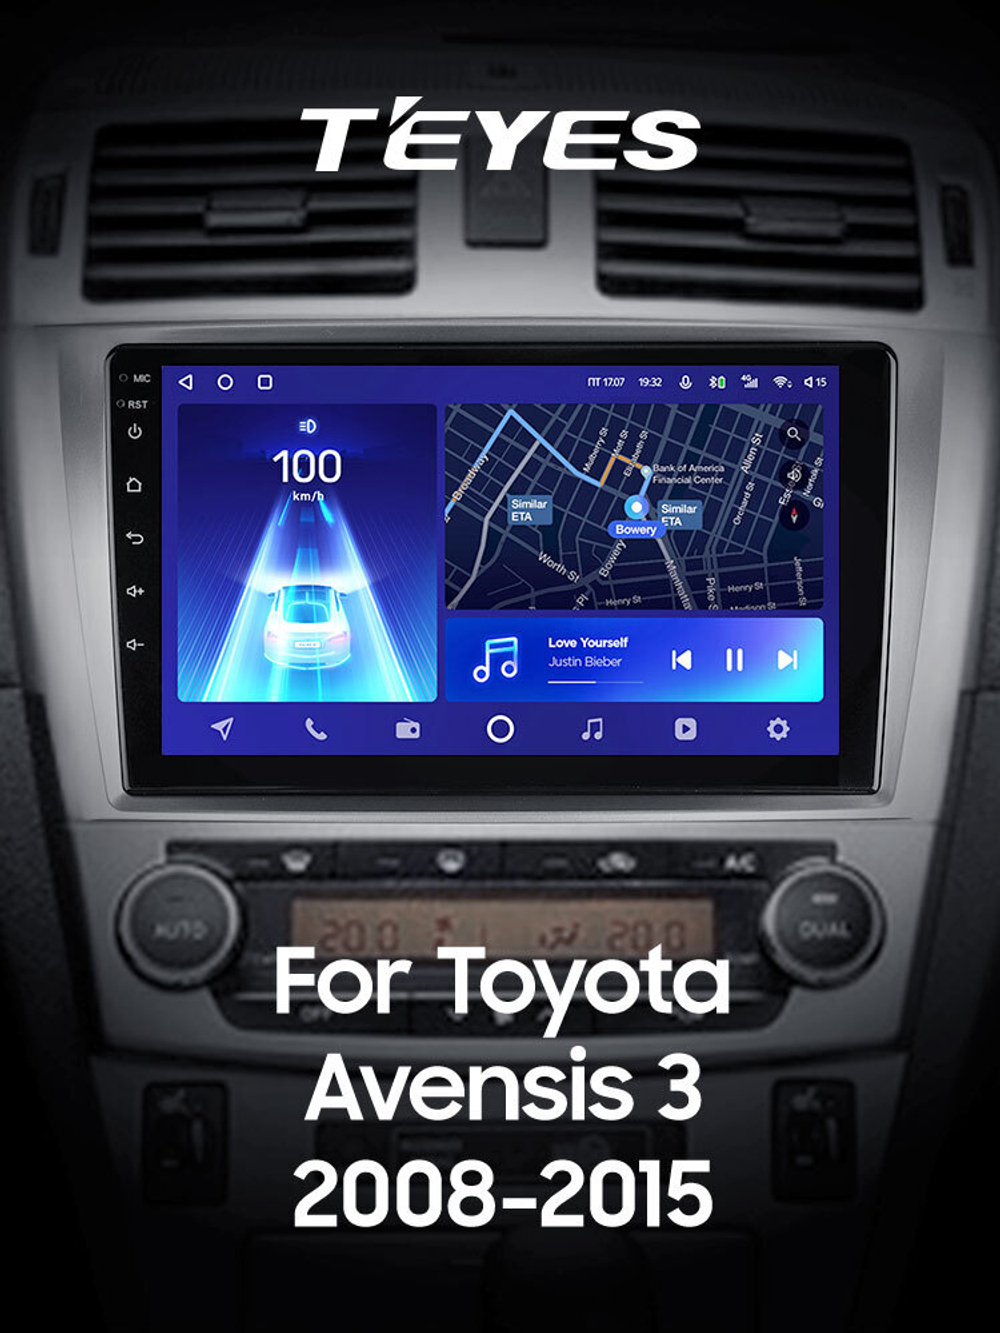 Teyes CC2 Plus 9" для Toyota Avensis 2008-2015